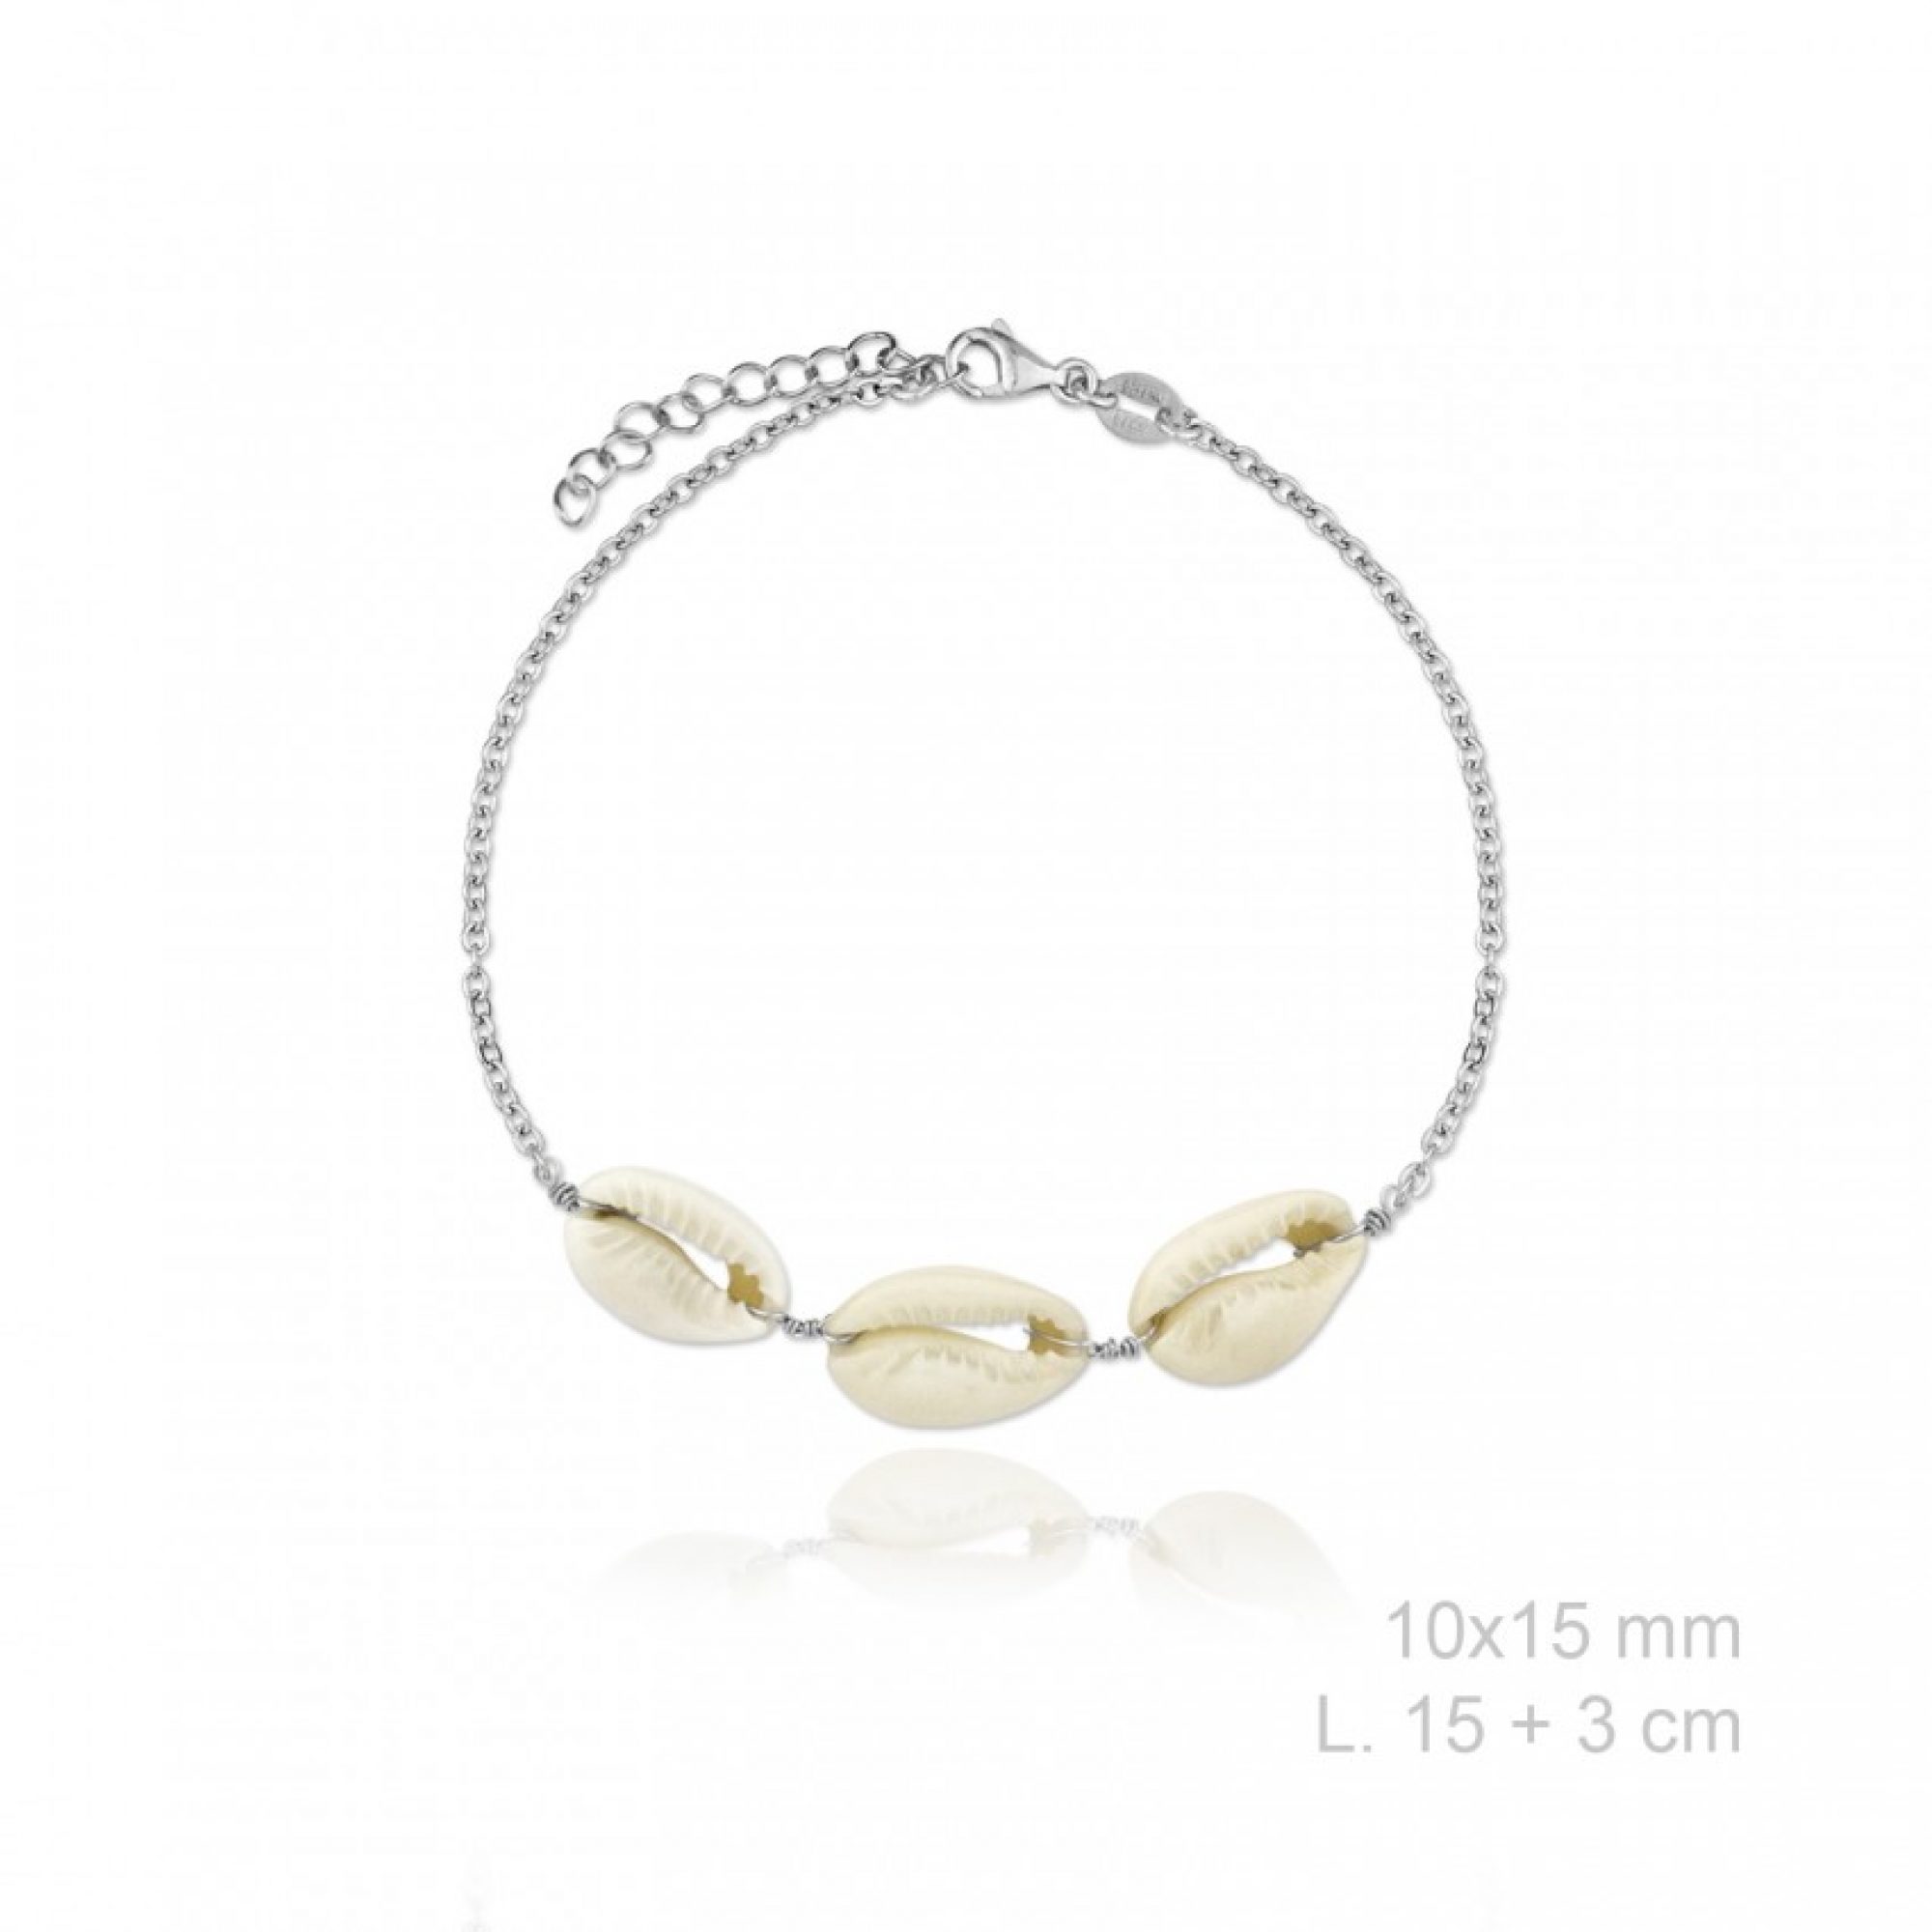 Silver bracelet with seashells